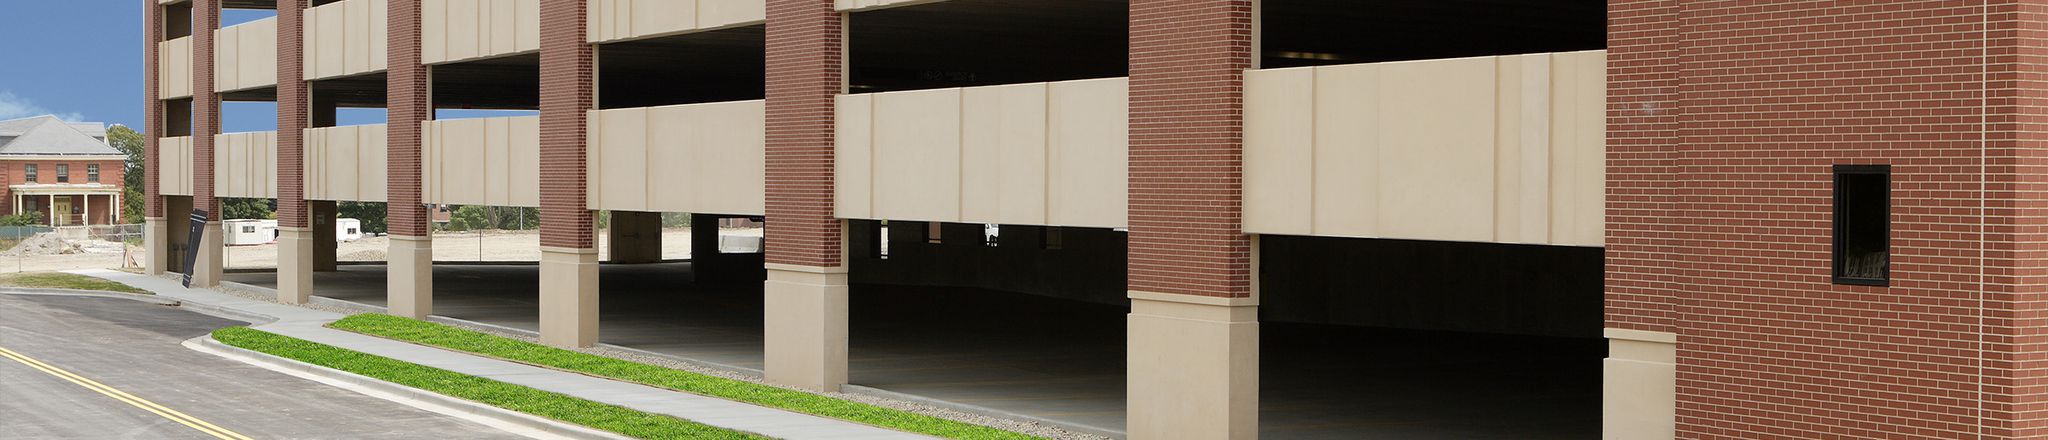 va medical center parking structure